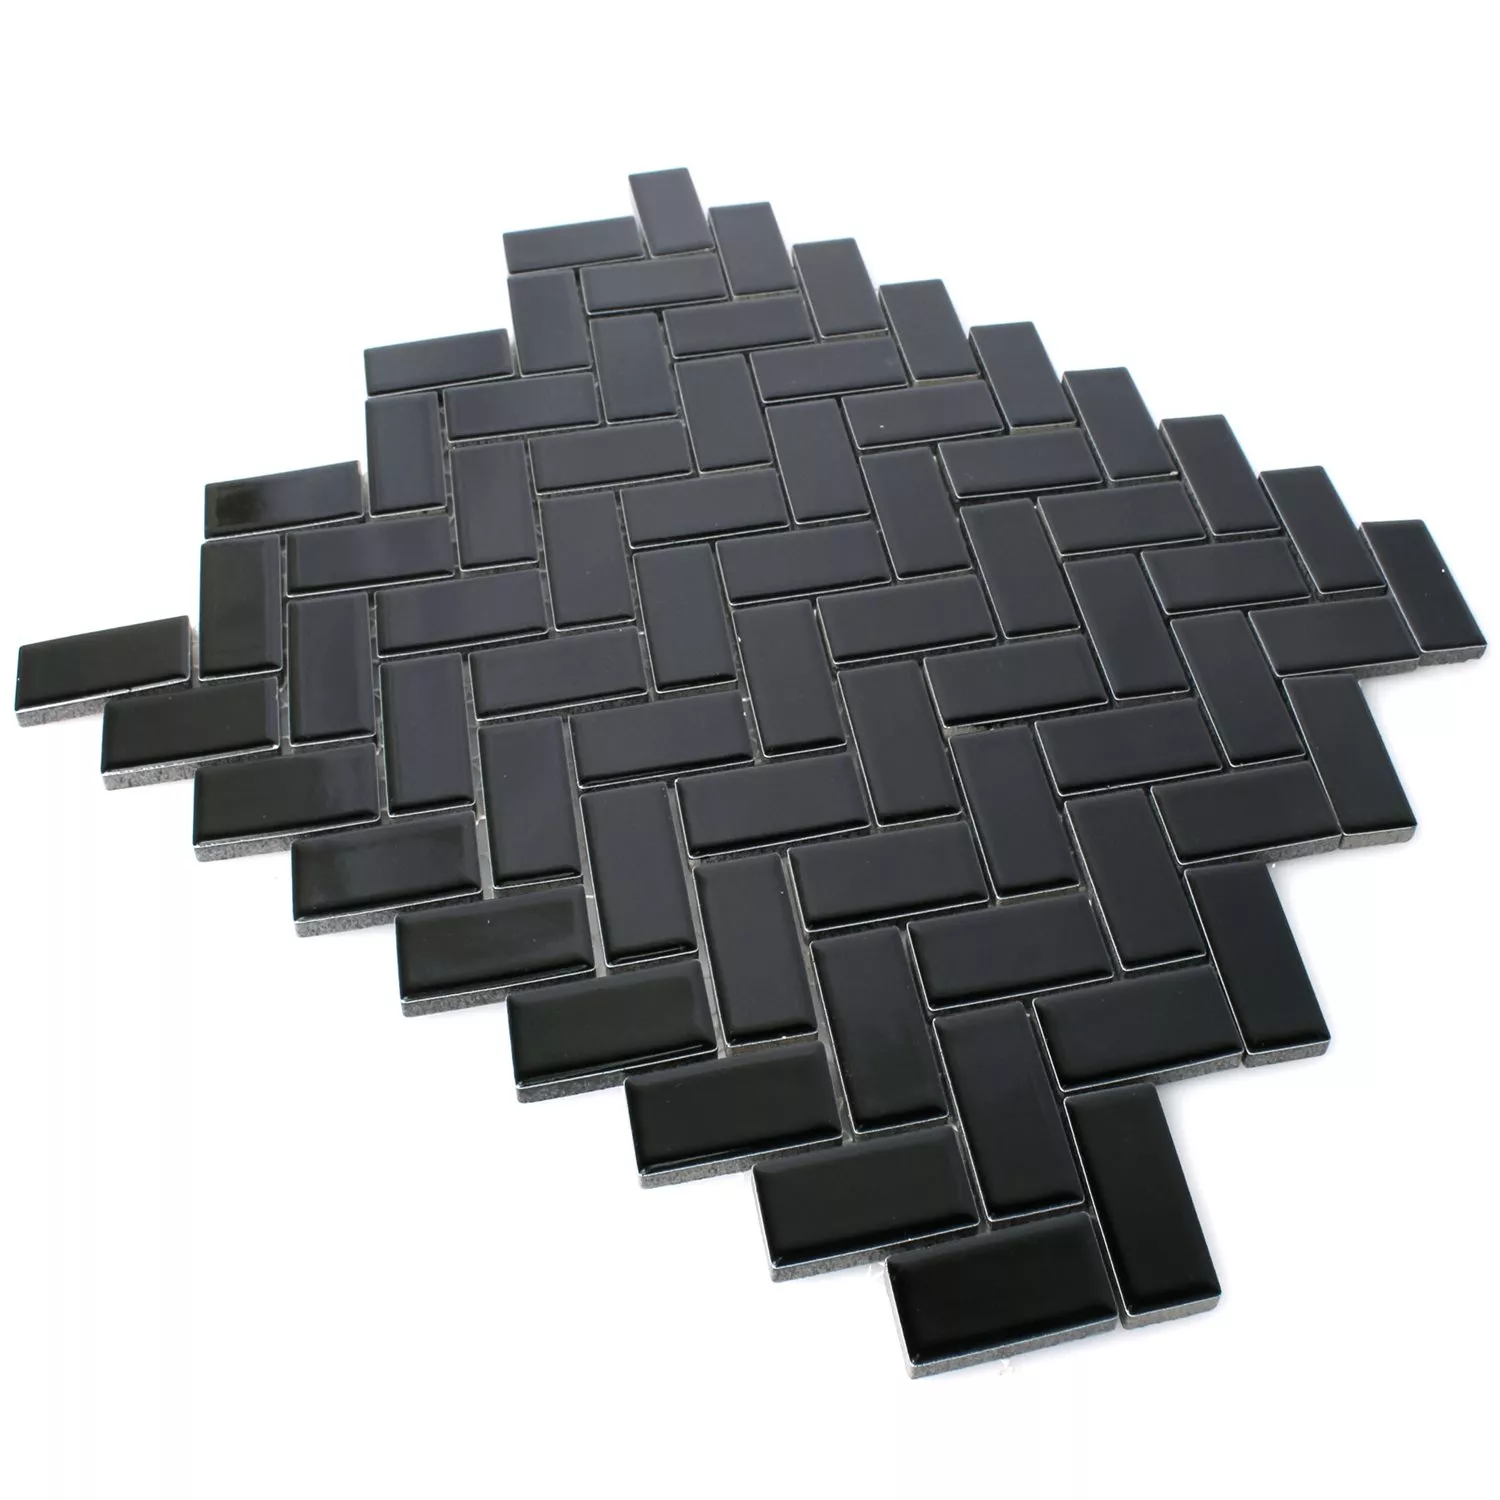 Mosaic Tiles Ceramic Casillas Black Mat